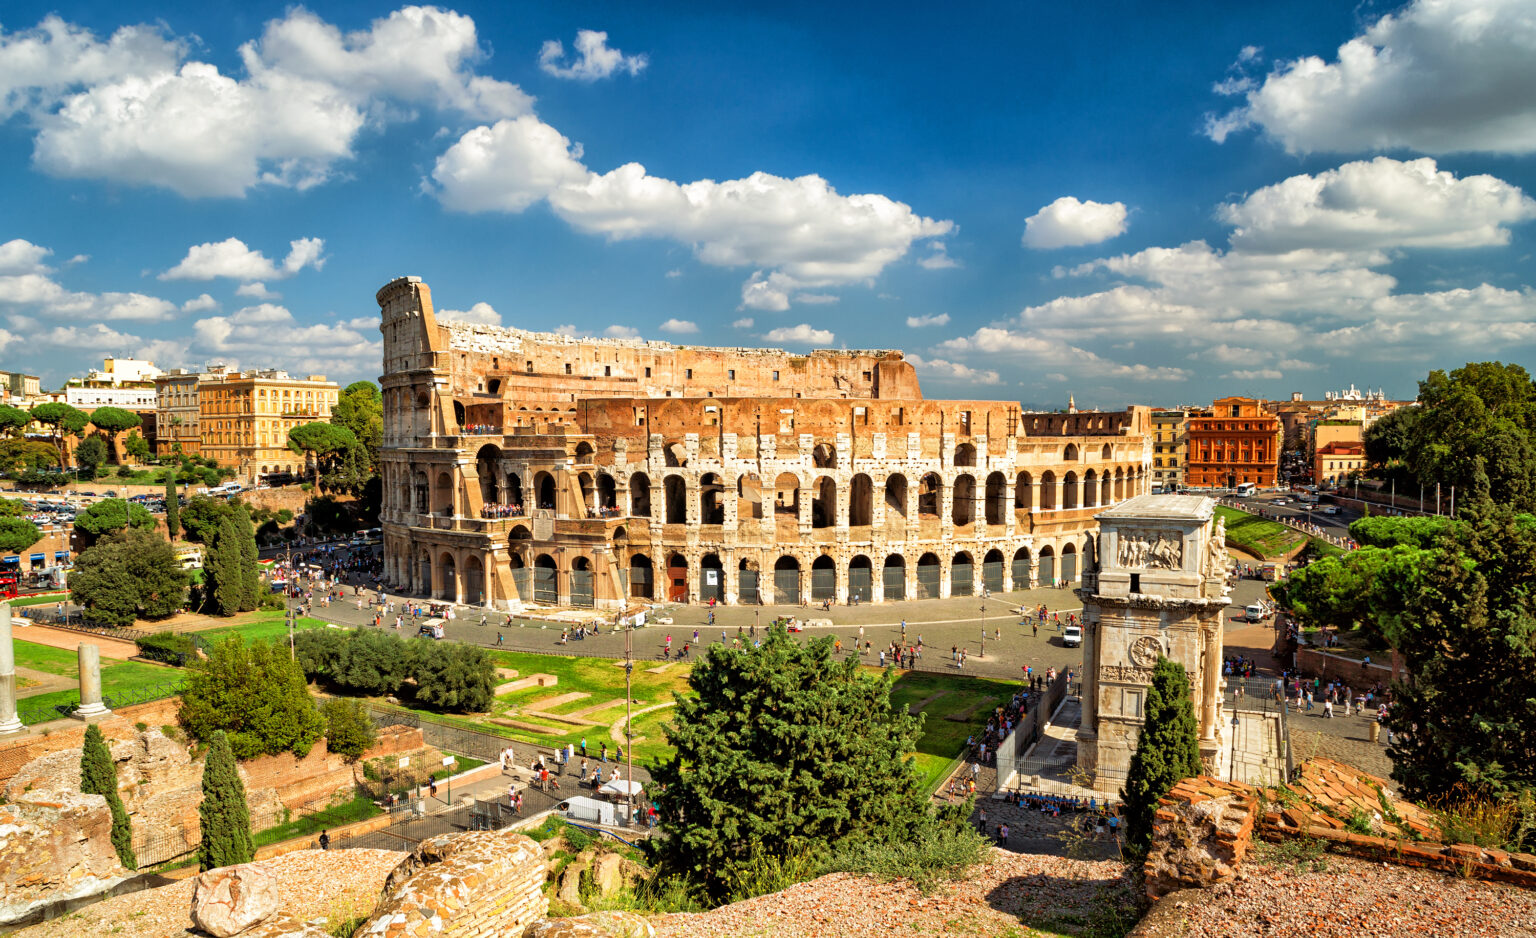  Colosseum- Rome, Italy